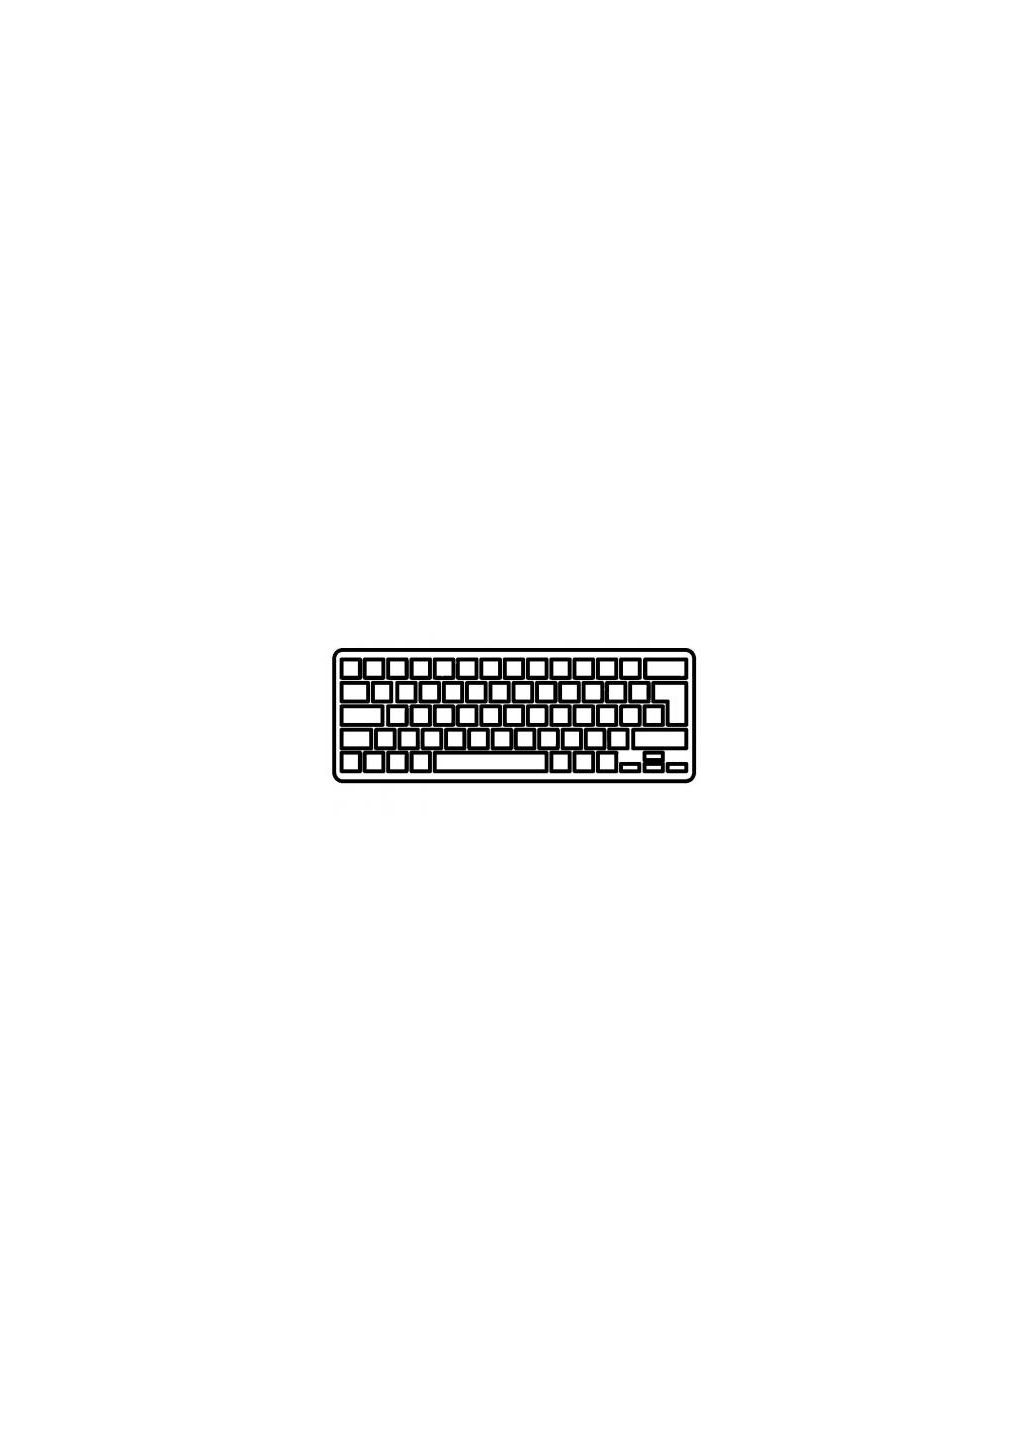 Клавиатура ноутбука (A43468) Dell vostro 1200 series белая ru (276708006)